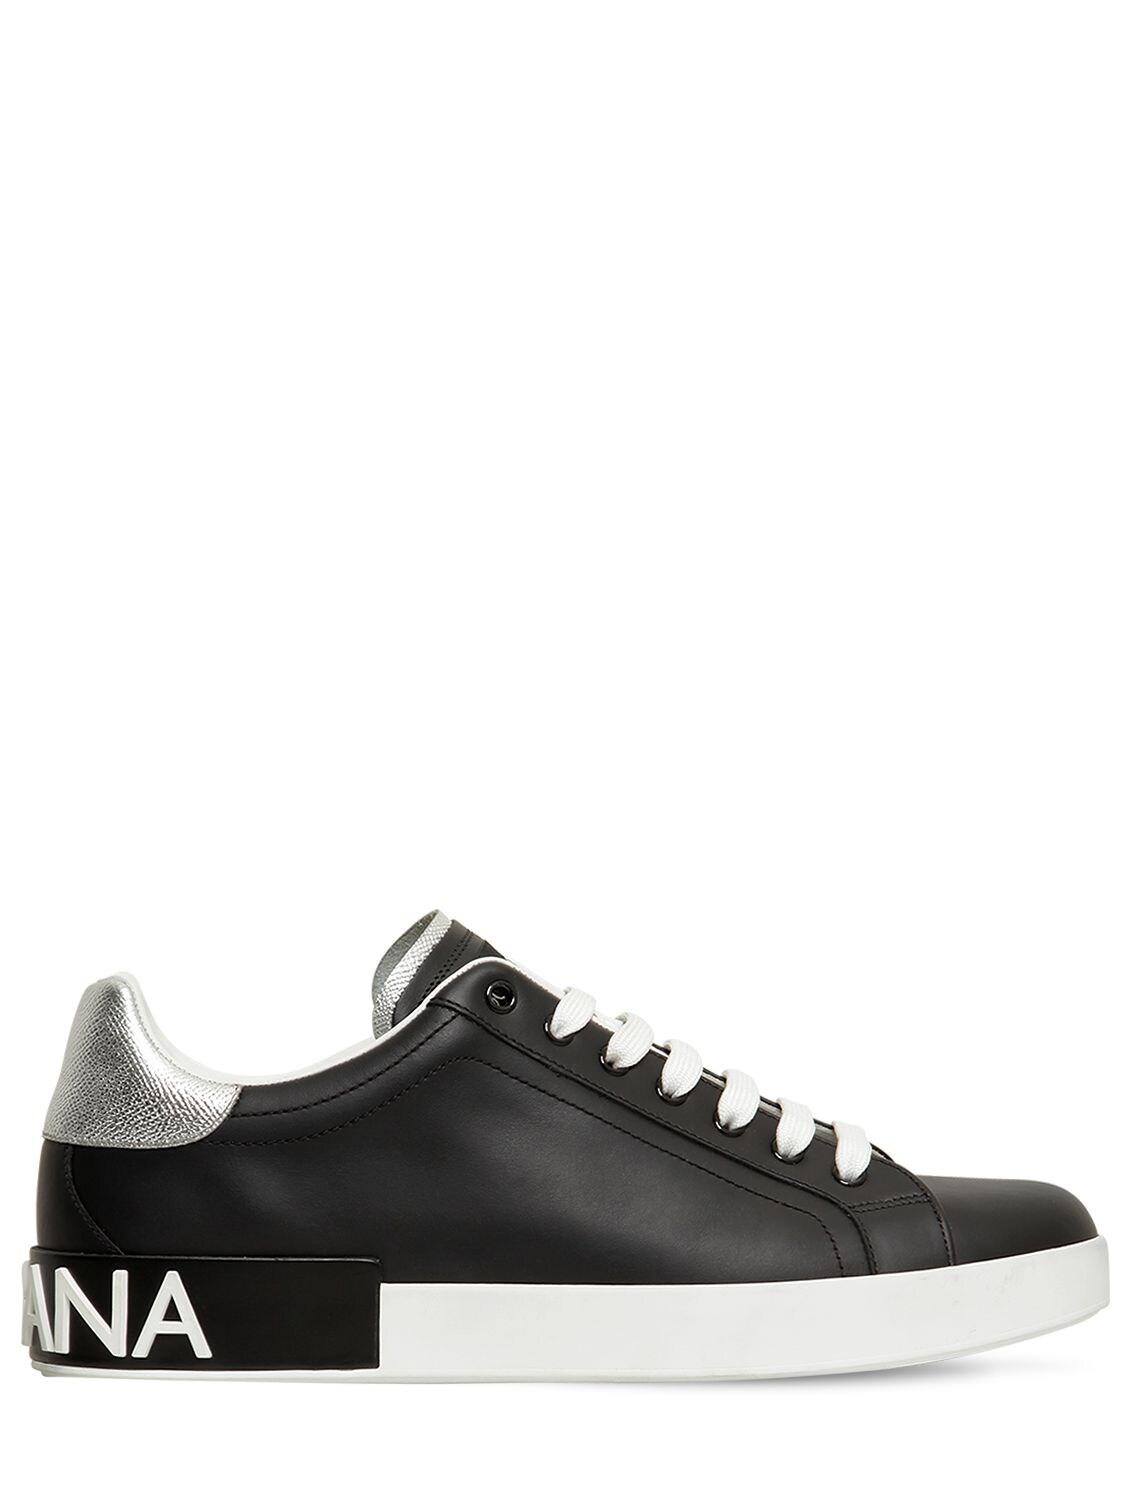 Dolce & Gabbana Portofino Leather Sneakers in Nero (Black) for Men ...